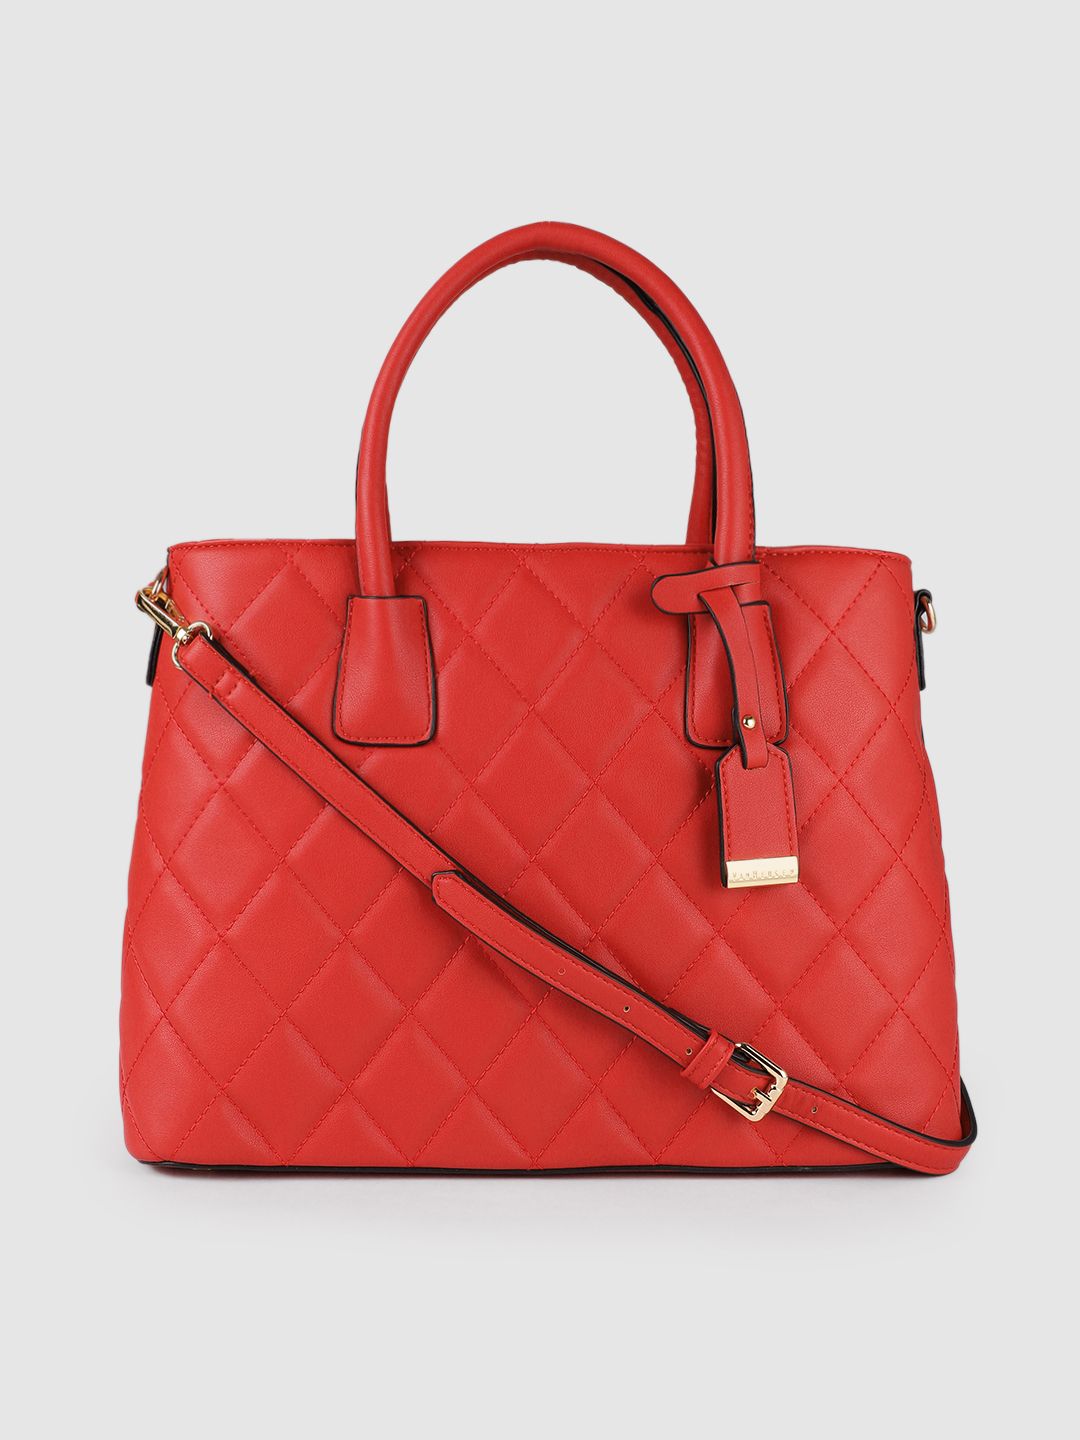 Van Heusen Red Quilted Handheld Bag Price in India